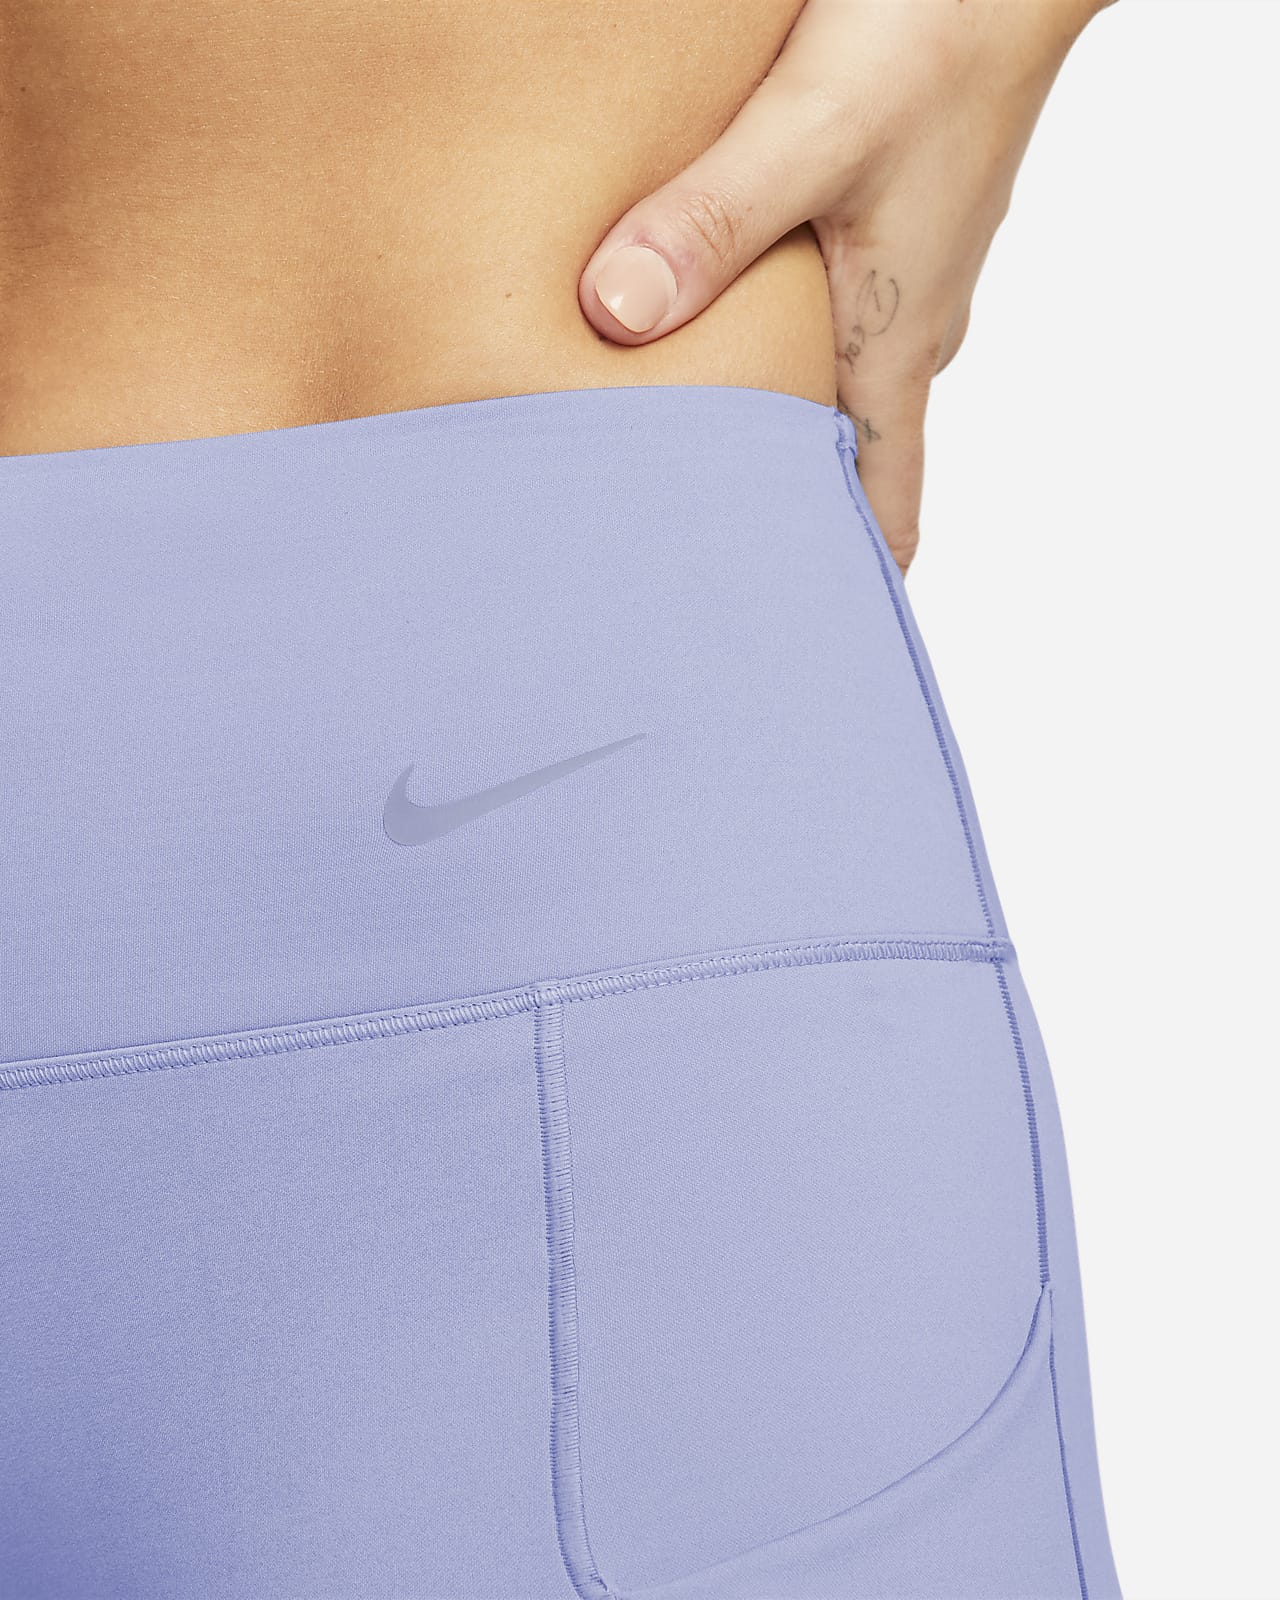 Legginsy Nike Go Women s Firm-Support Mid-Rise 7/8 Leggings with Pockets 